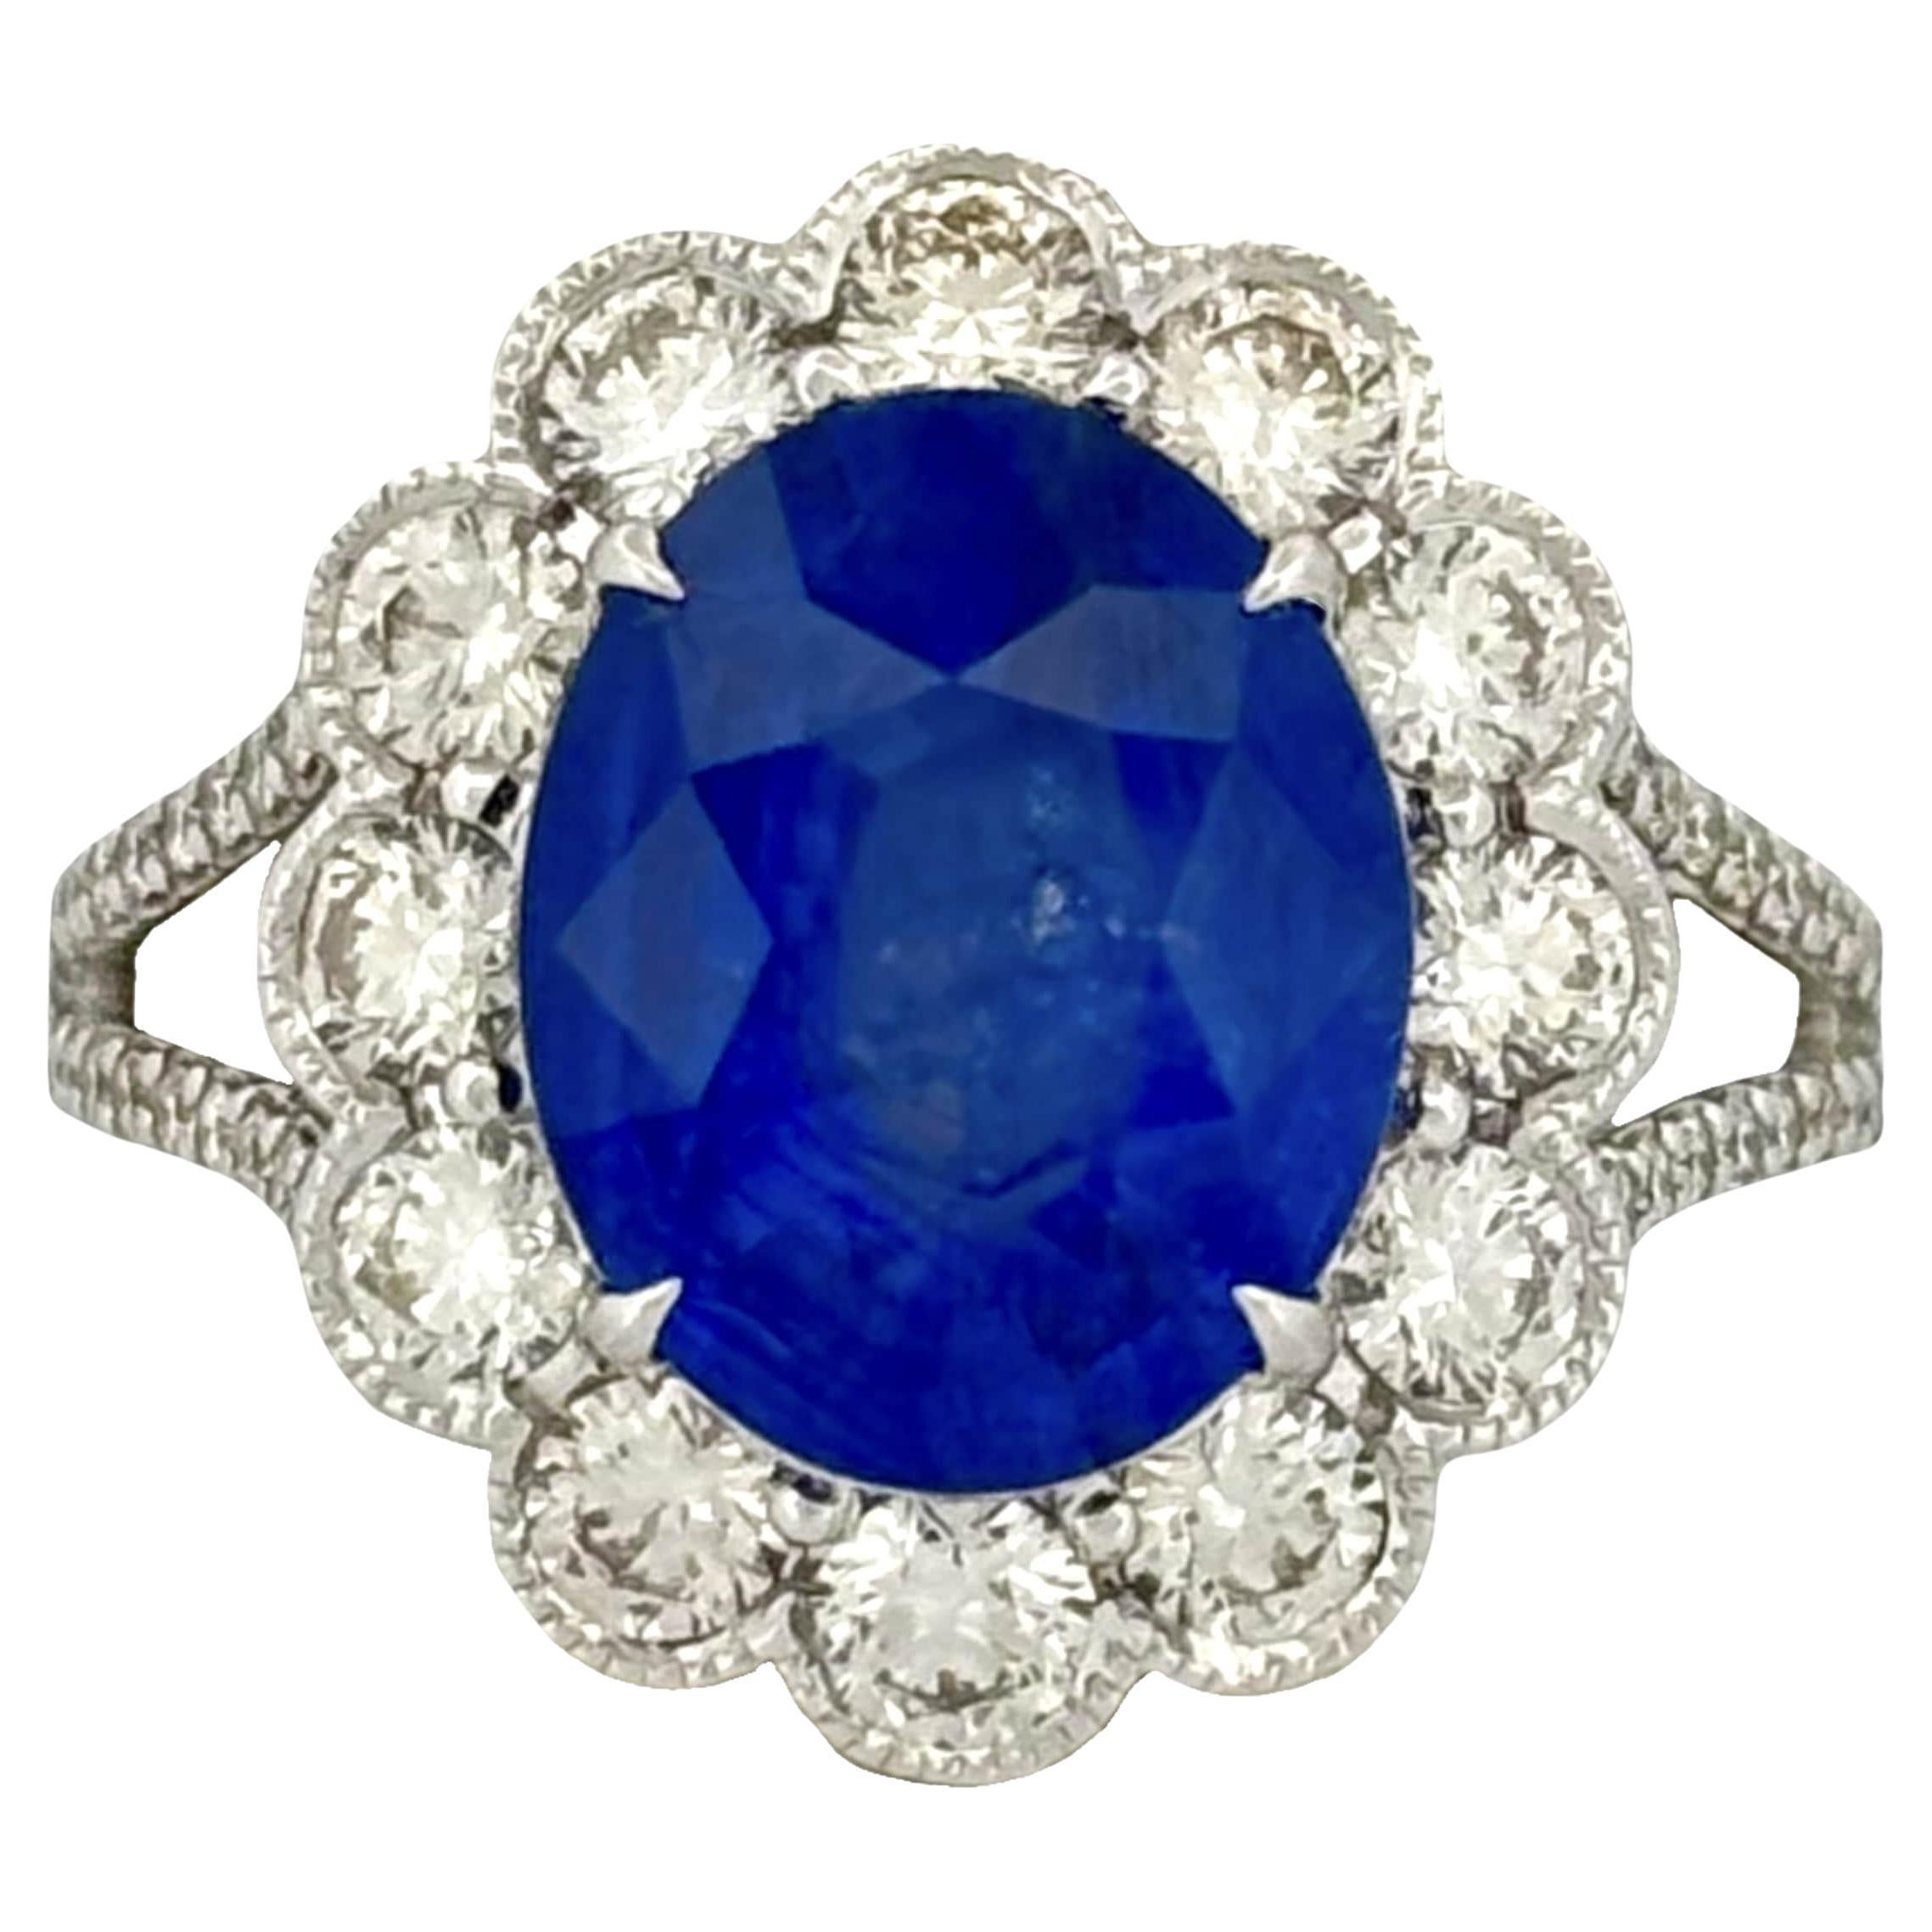 4.32 Carat Ceylon Royal Blue Sapphire Ring in 18K White Gold